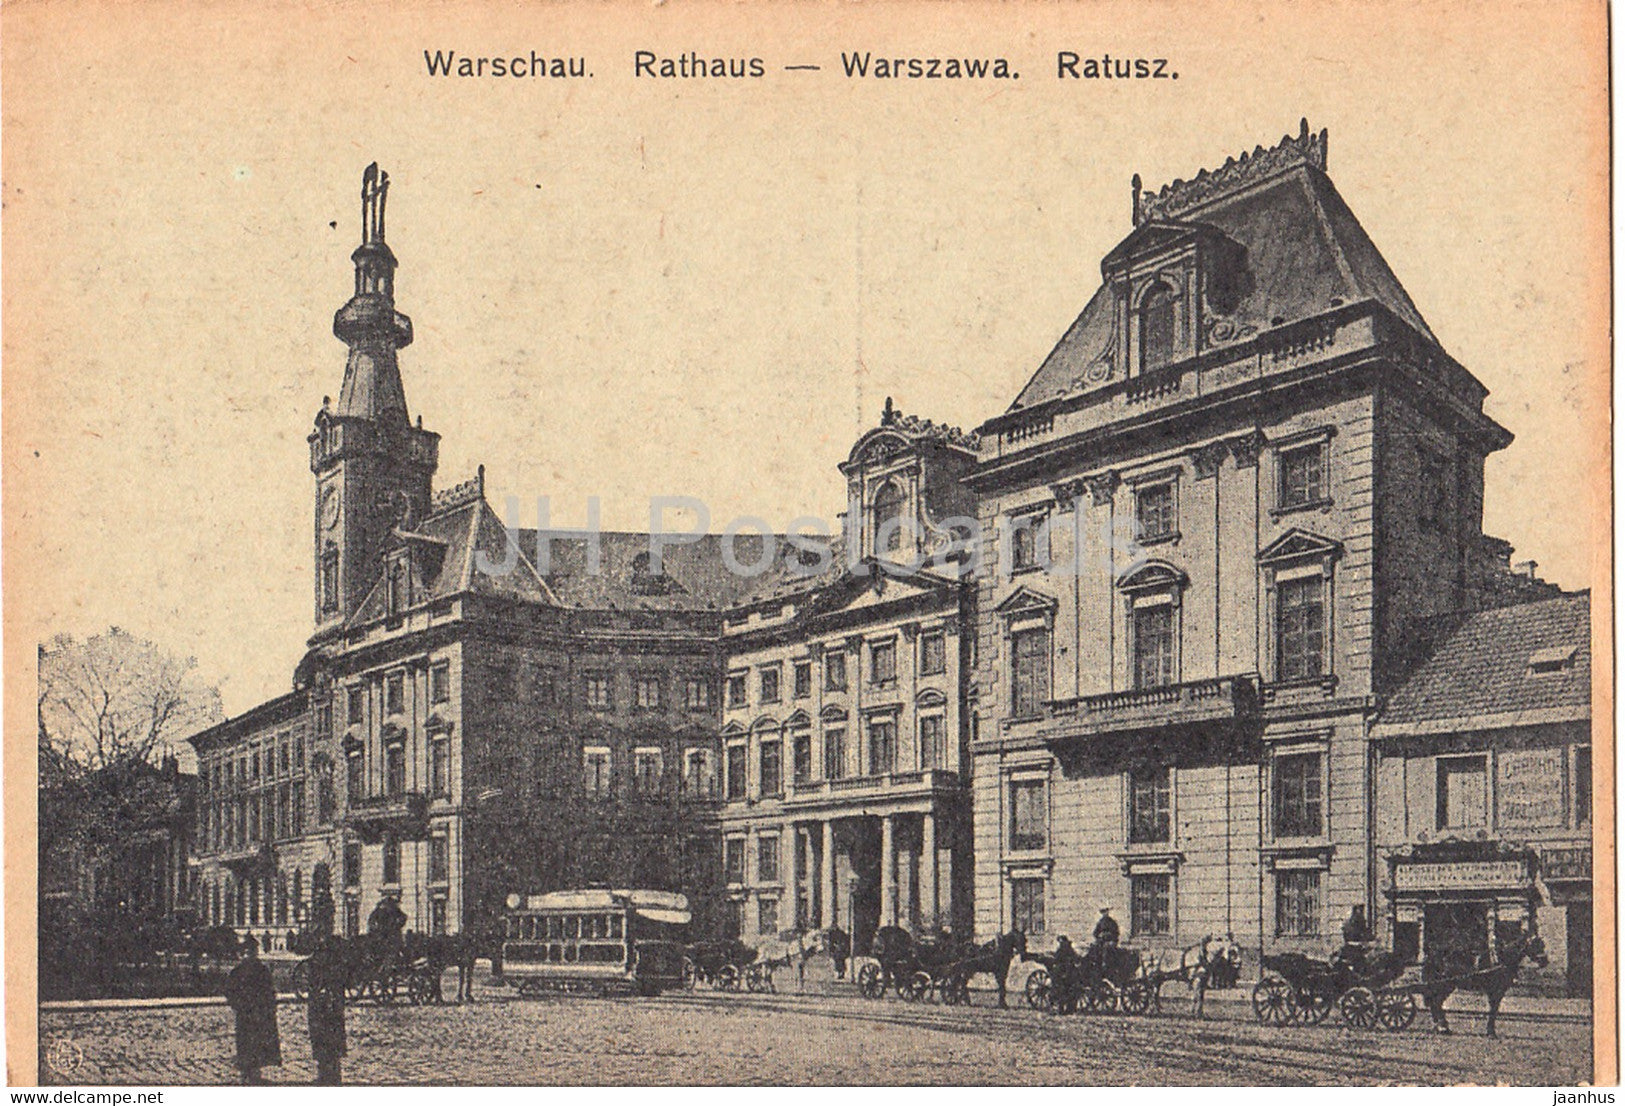 Warszawa - Warschau - Rathaus - Ratusz - tram - old postcard - Poland - unused - JH Postcards